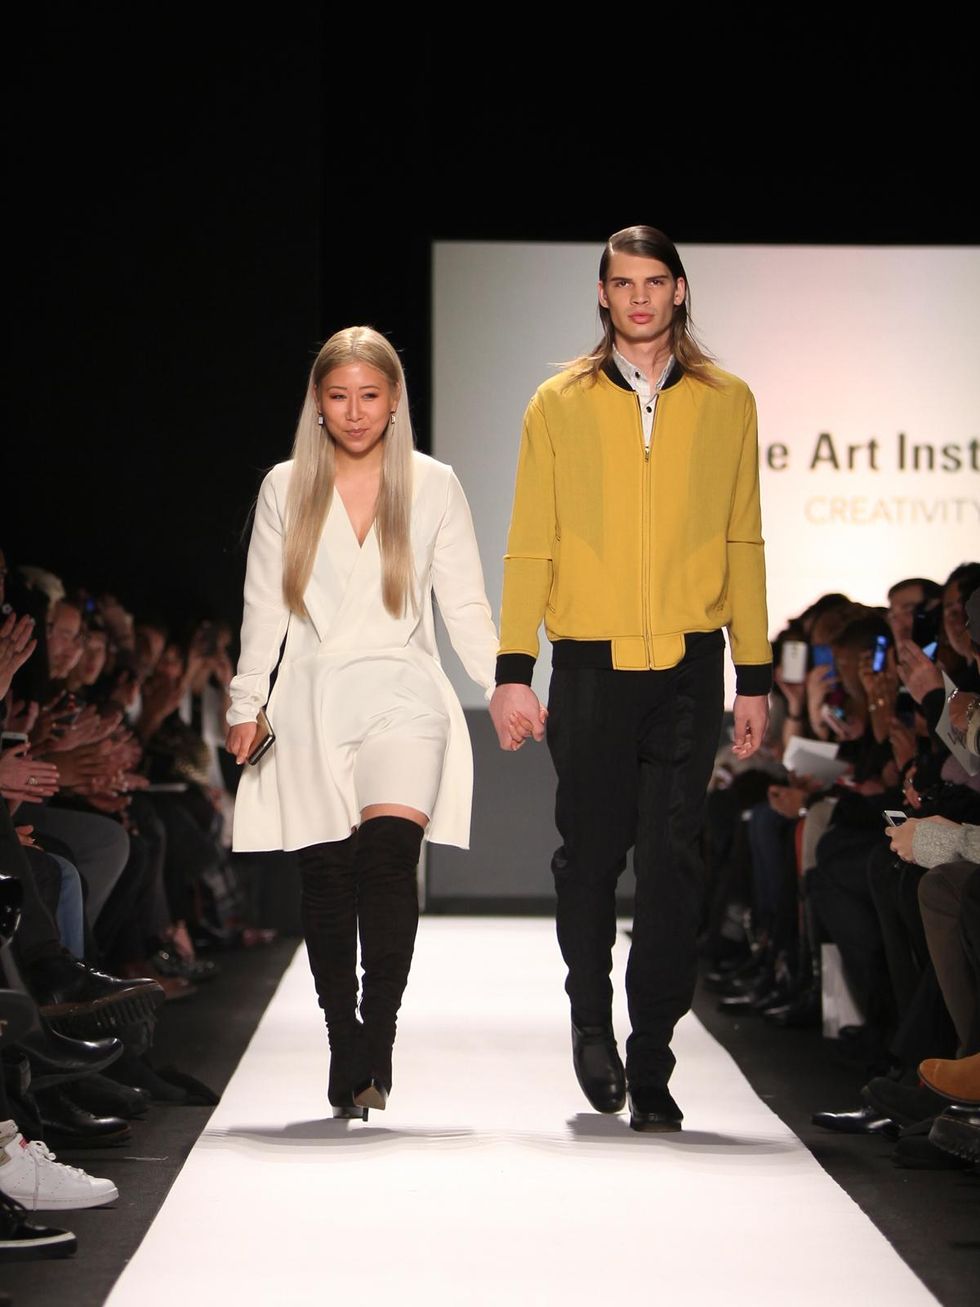 Clifford New York Fashion Week fall 2015 The Art Institutes winners February 2015 Grace Ahn designer